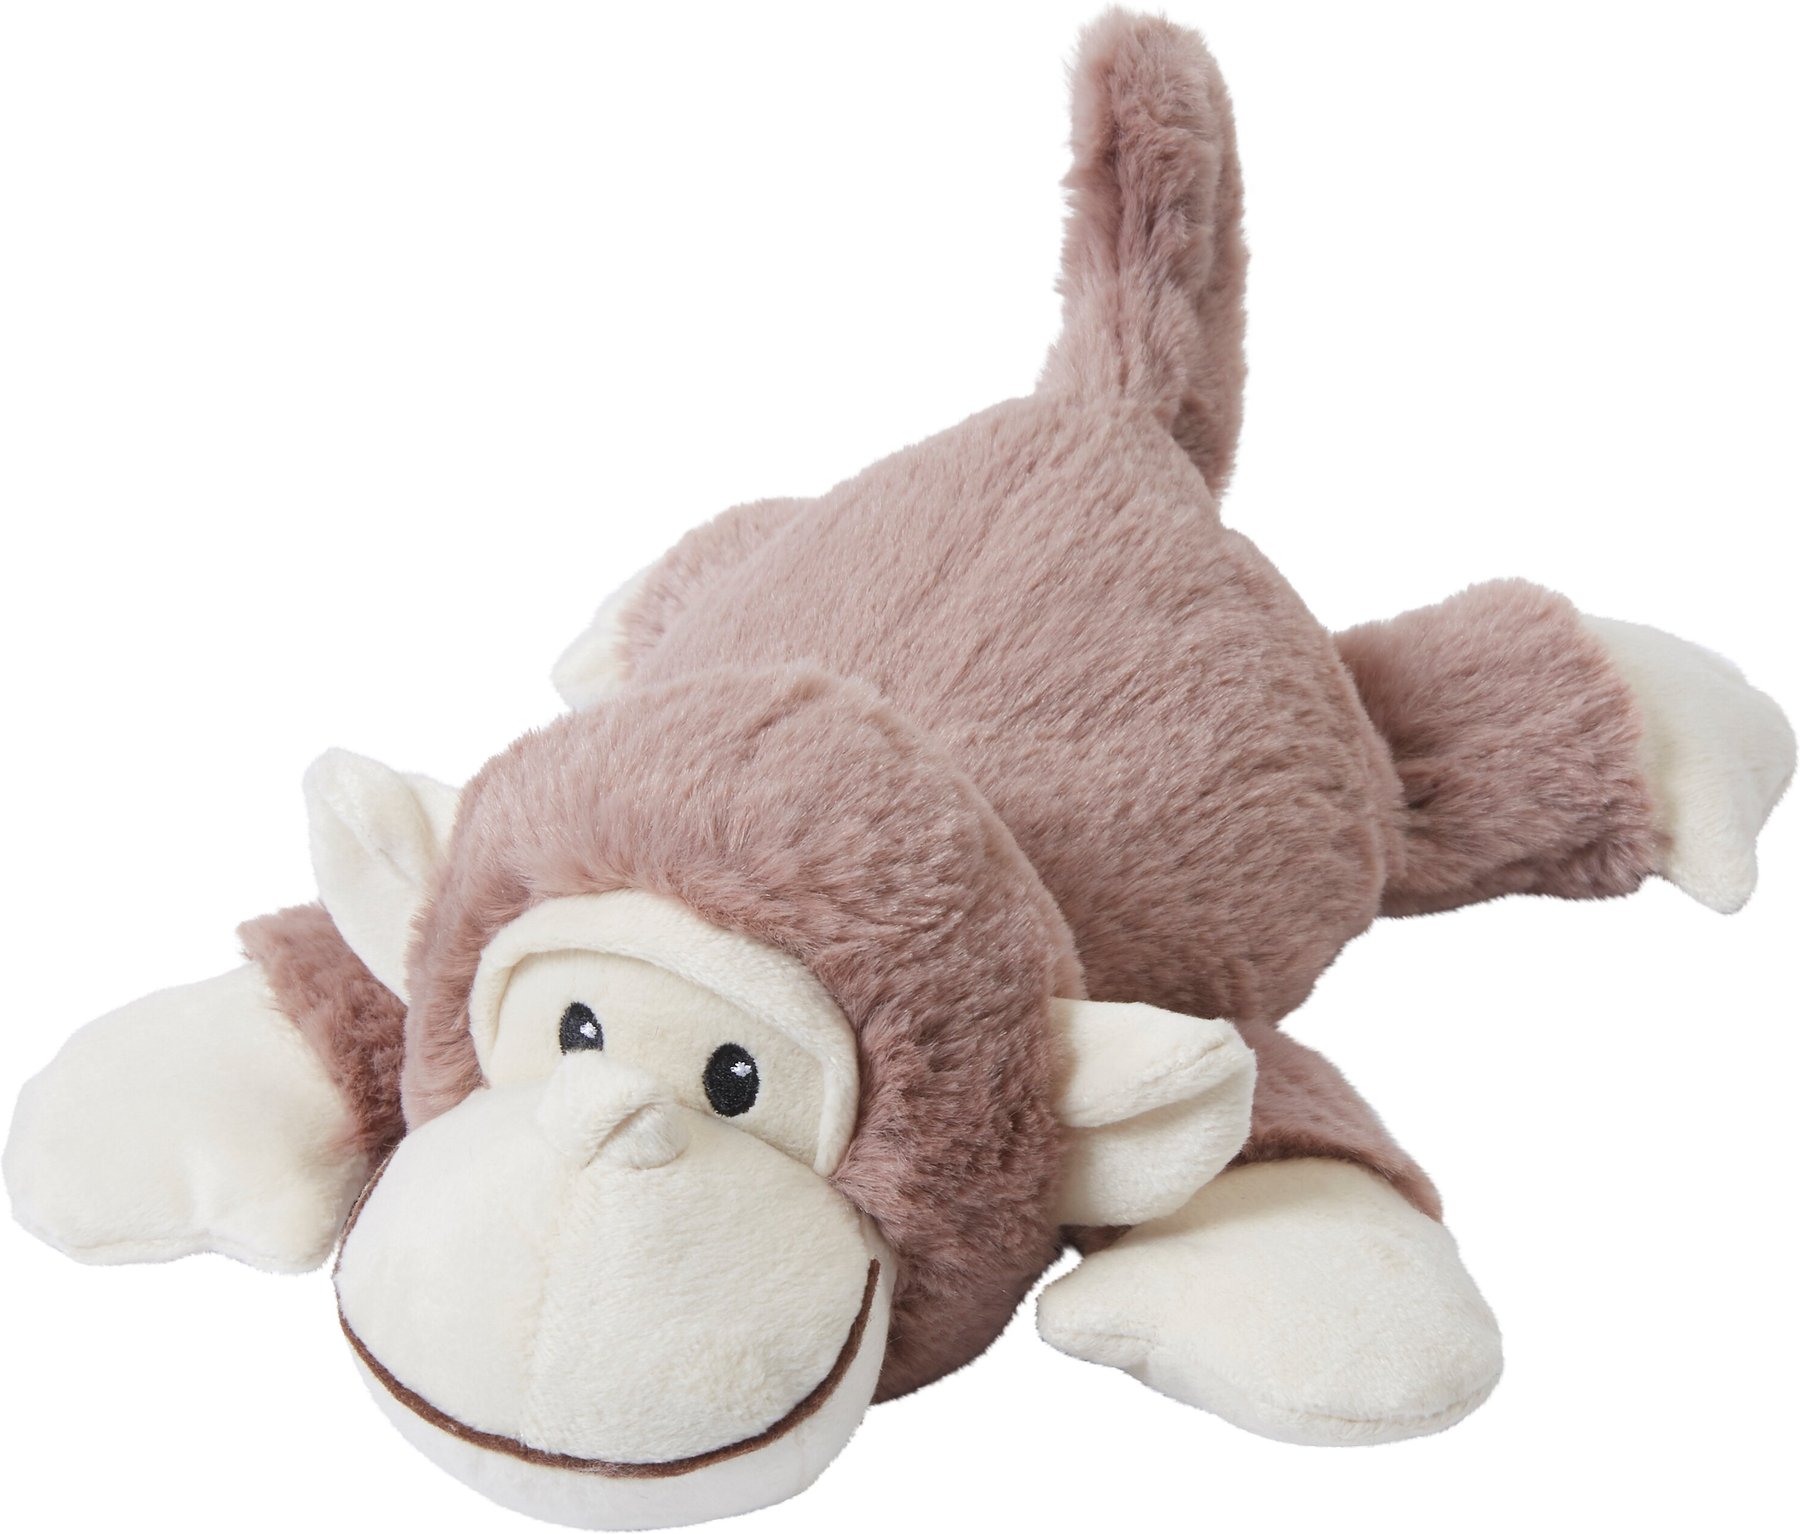 10" Squeaky Monkey Dog Toy 